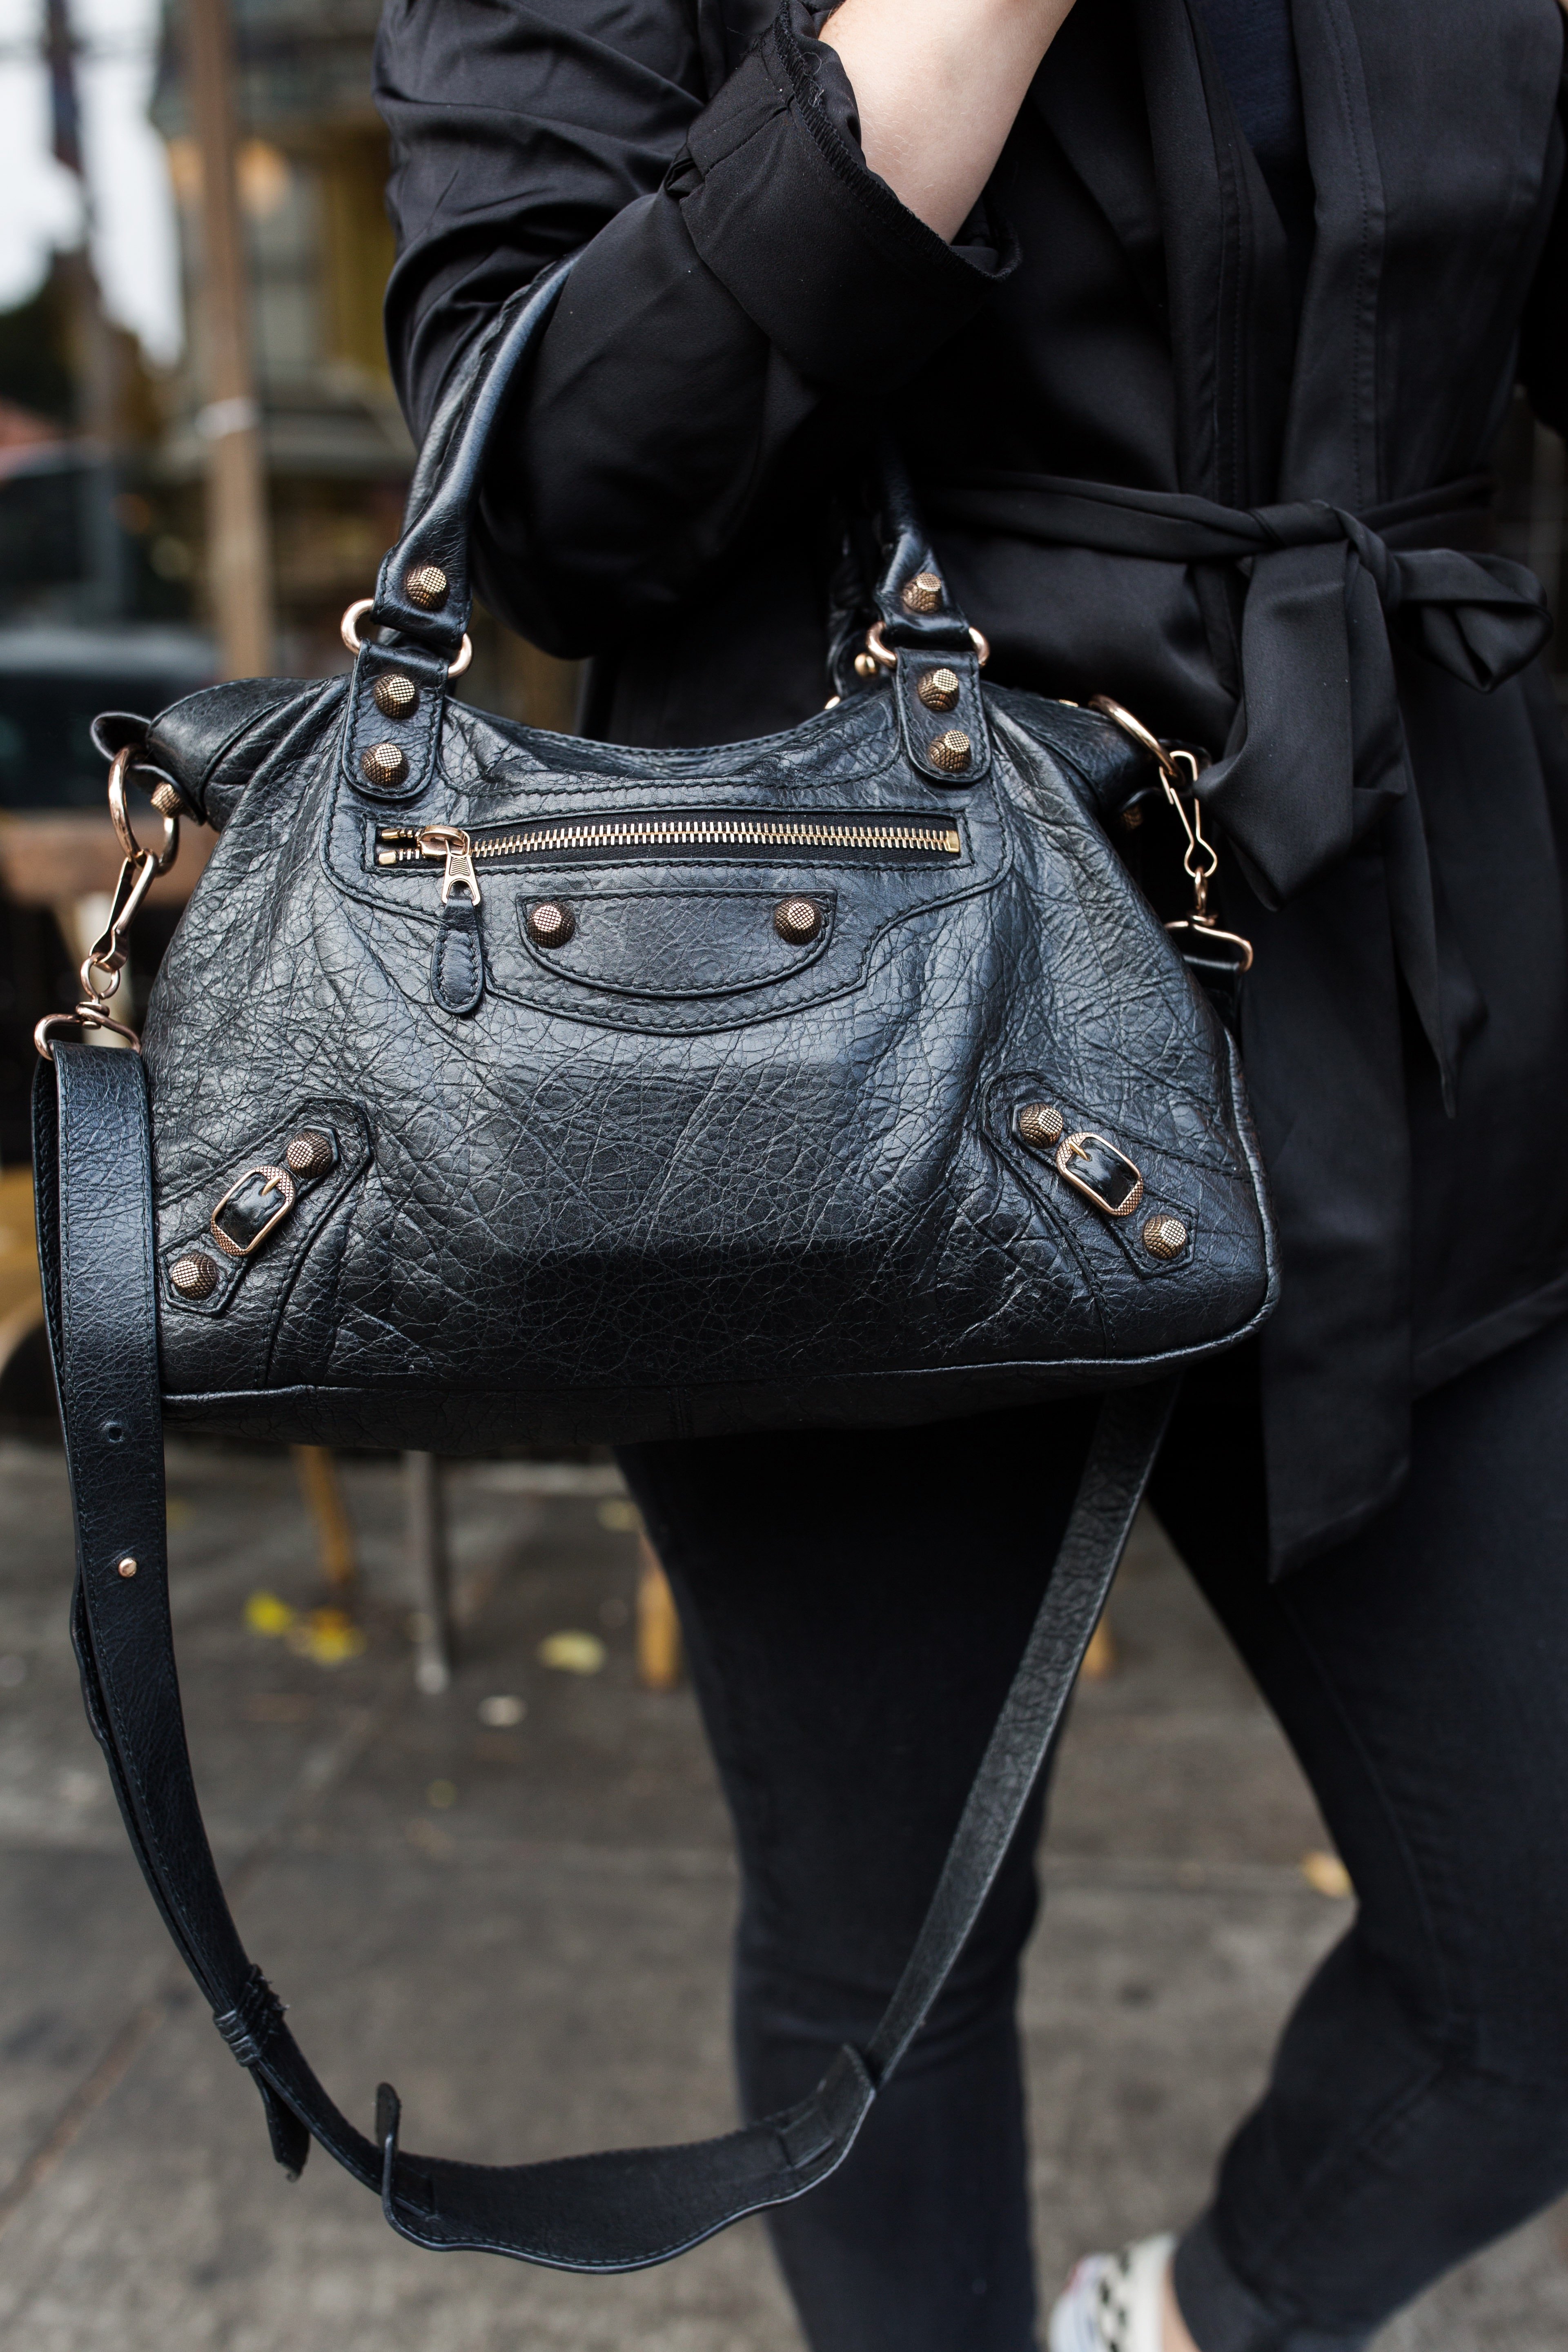 How to Buy Designer Handbags on eBay